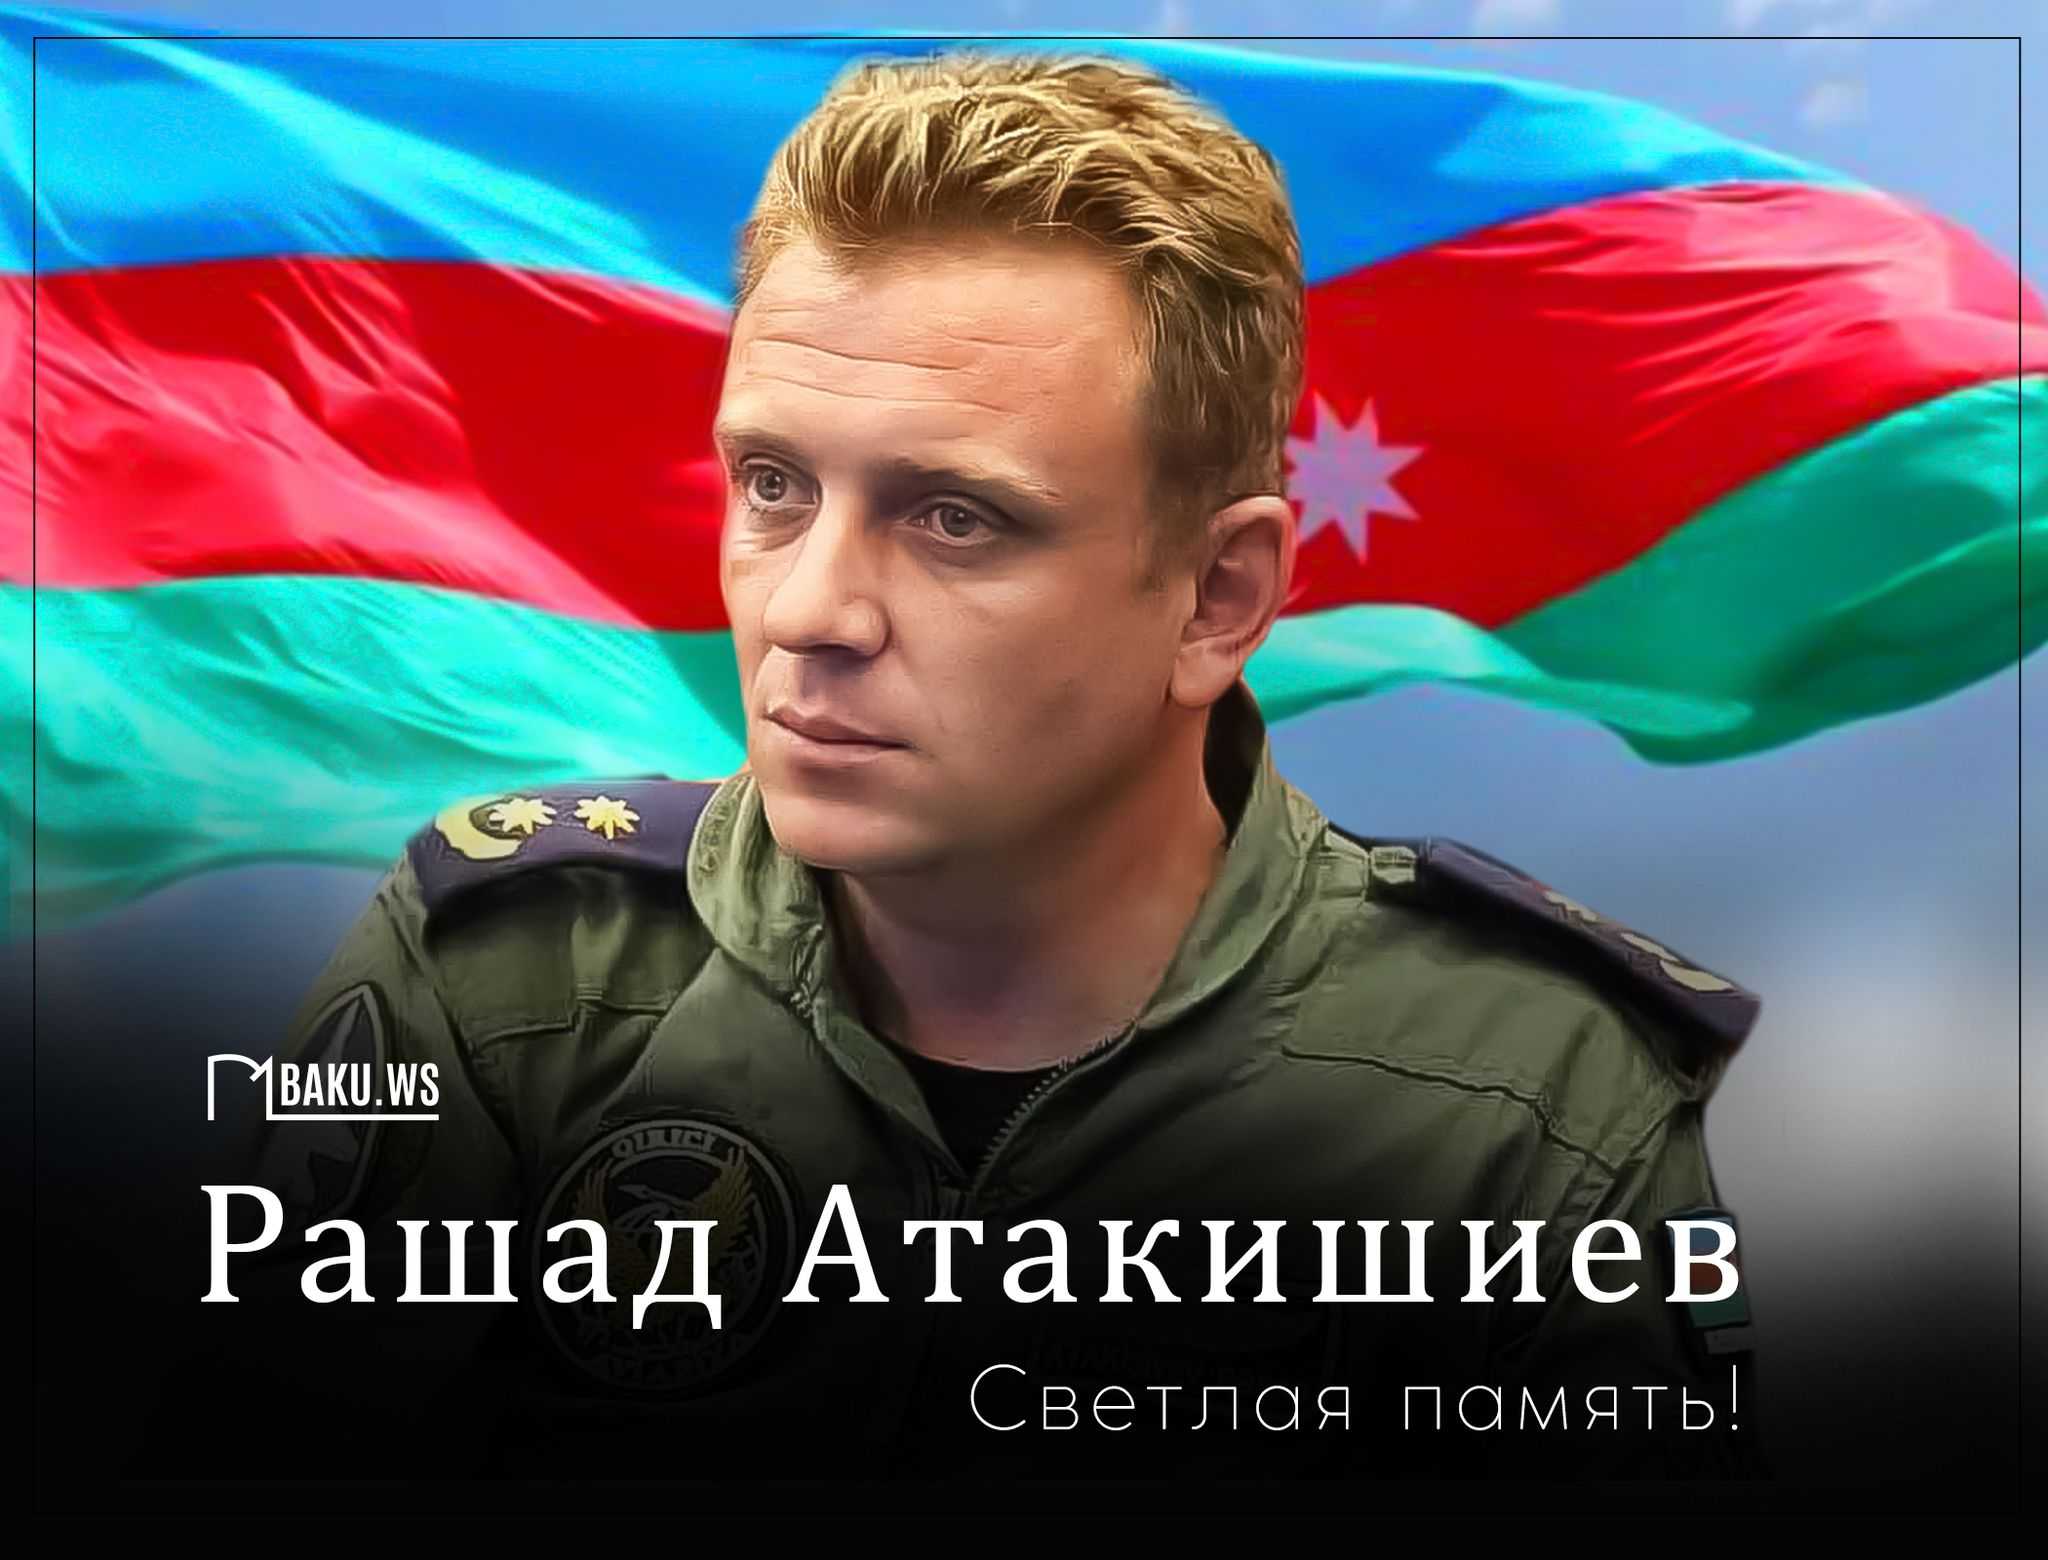 Минуло три года со дня гибели полковник-лейтенанта Рашада Атакишиева